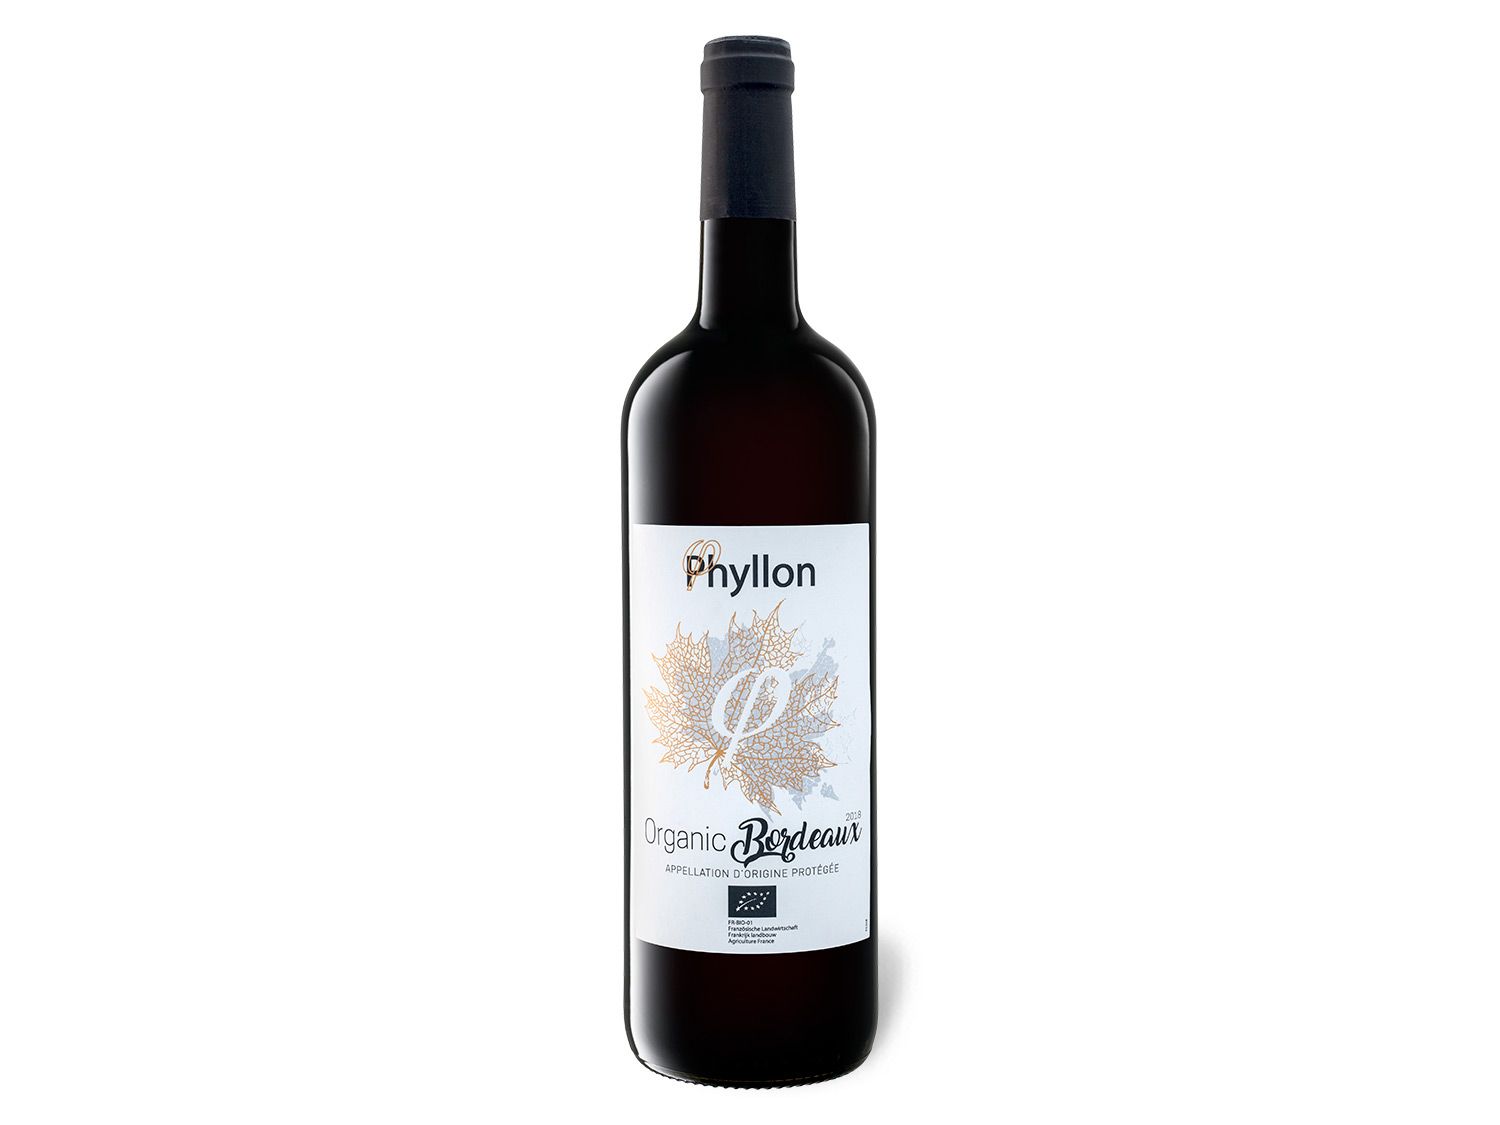 BIO Phyllon Organic Bordeaux AOP trocken, Rotwein 2018 Wein & Spirituosen Lidl DE